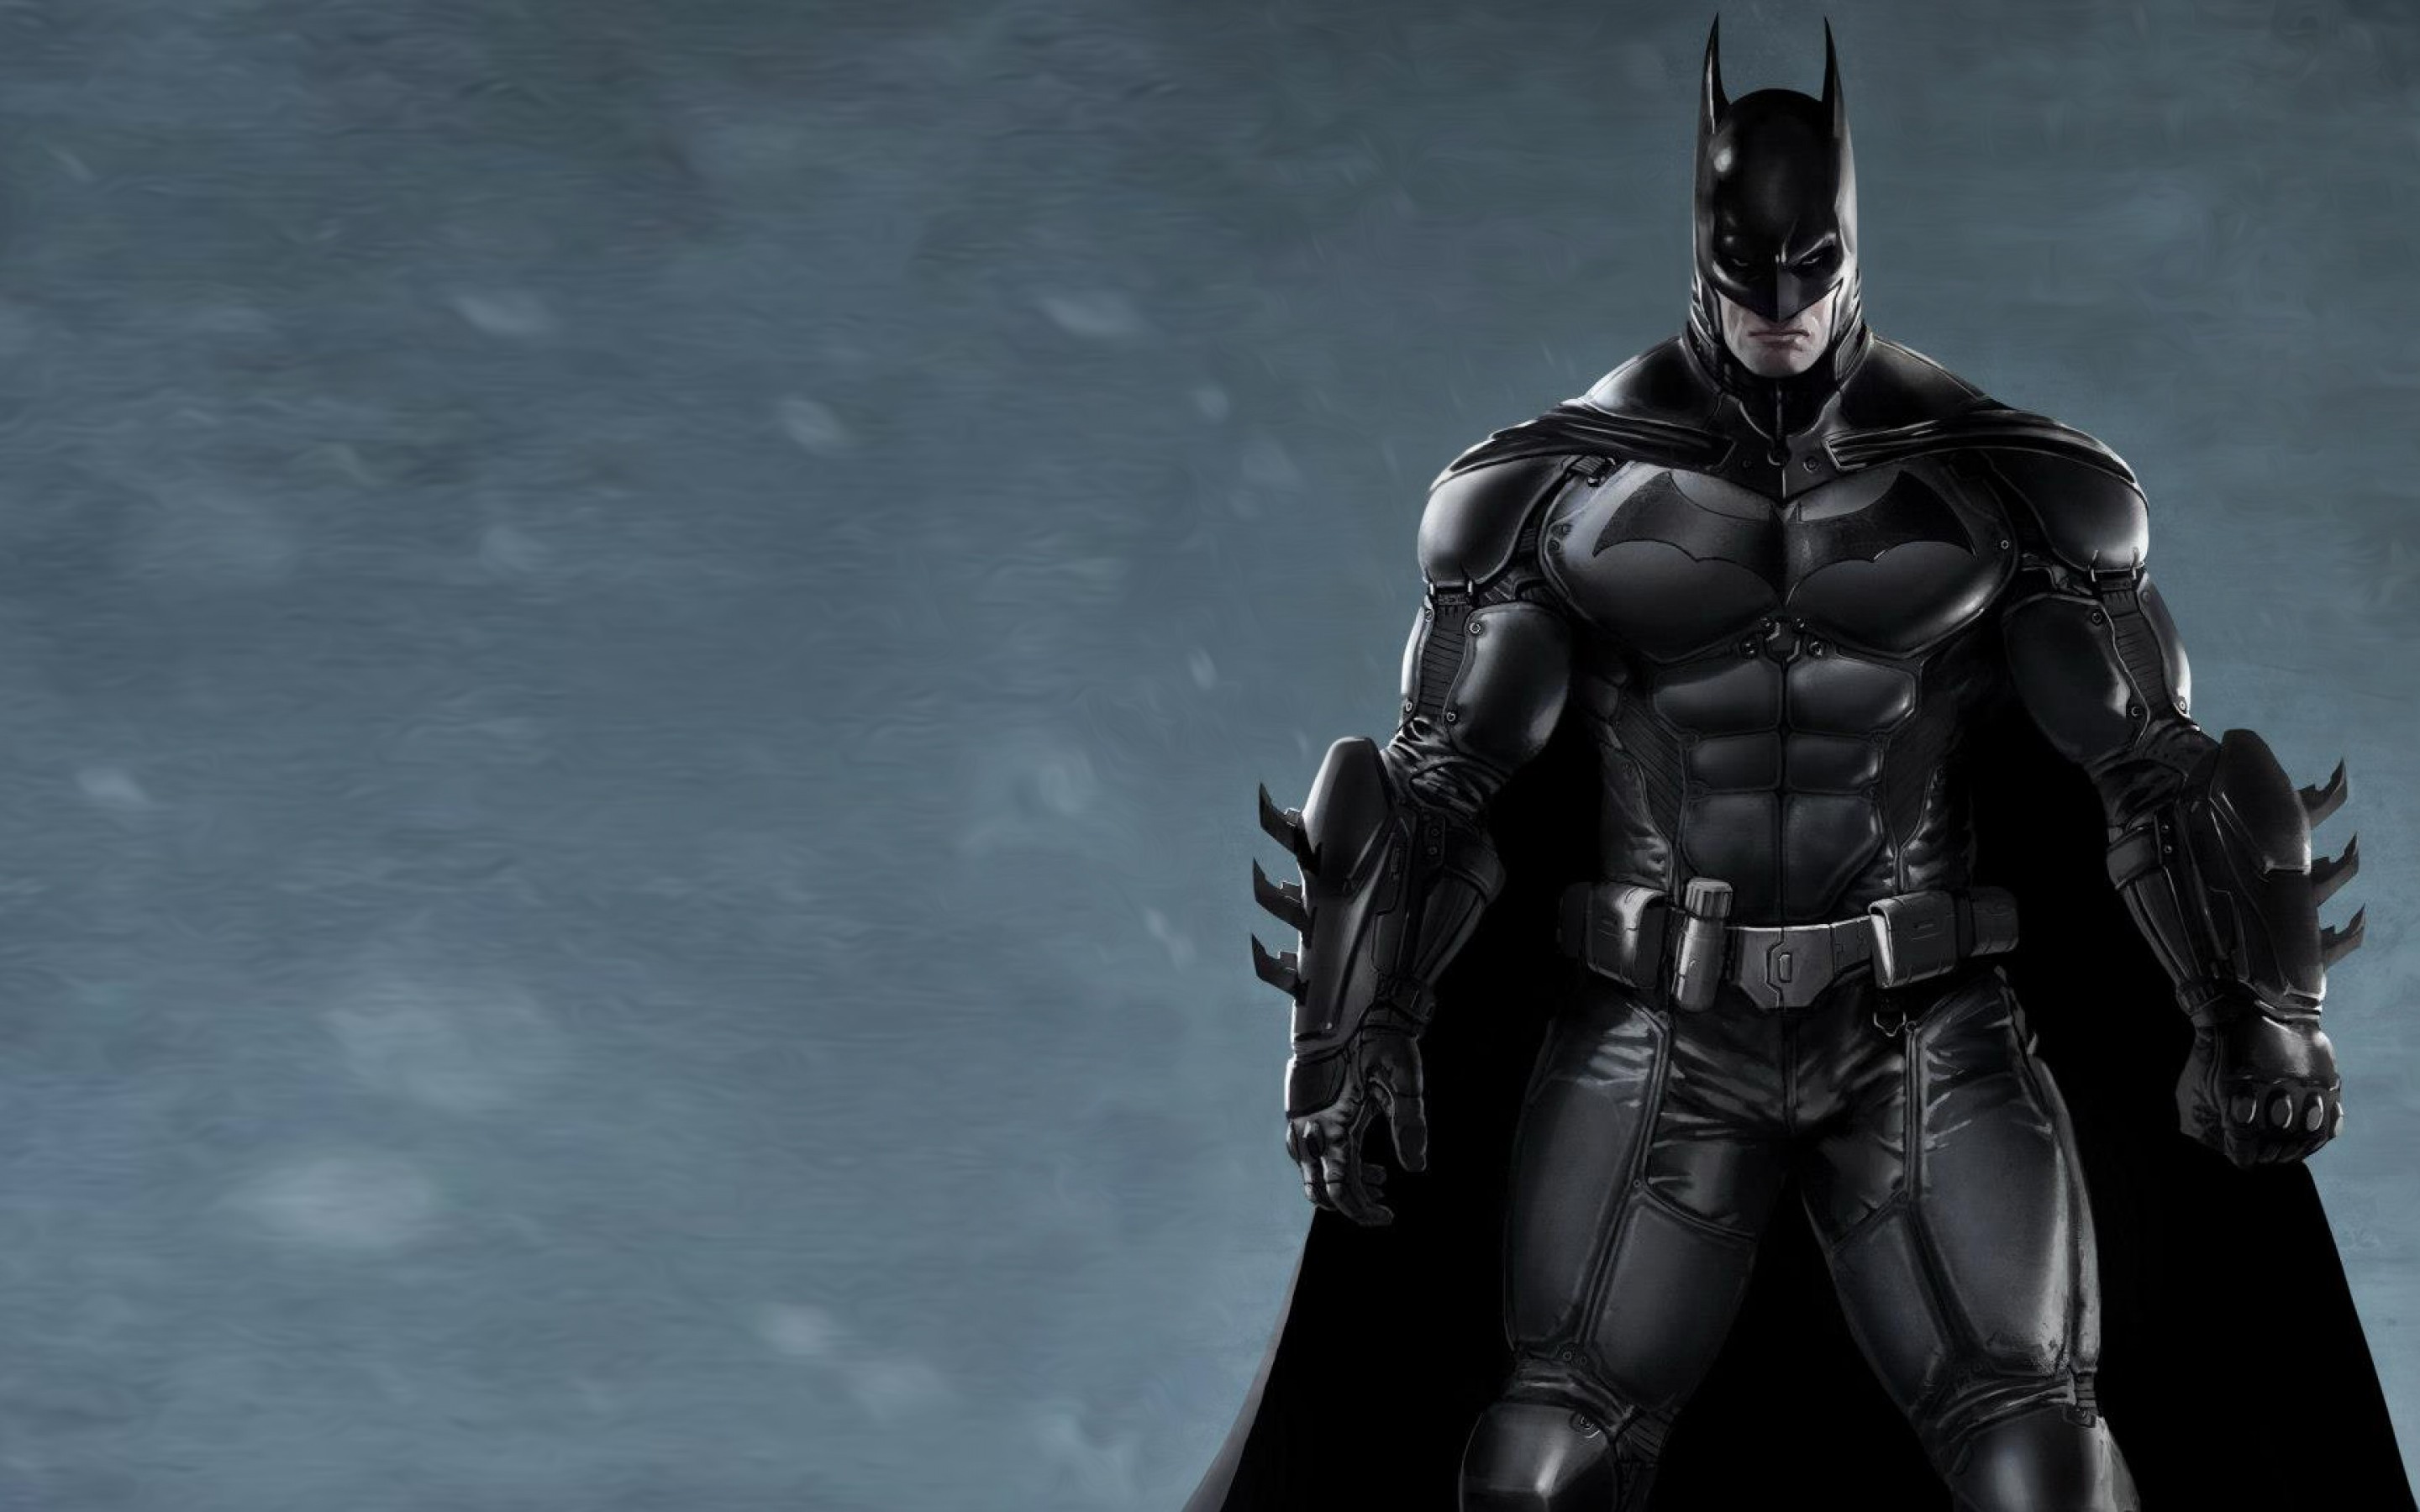 Batman - The Dark Knight of Gotham City